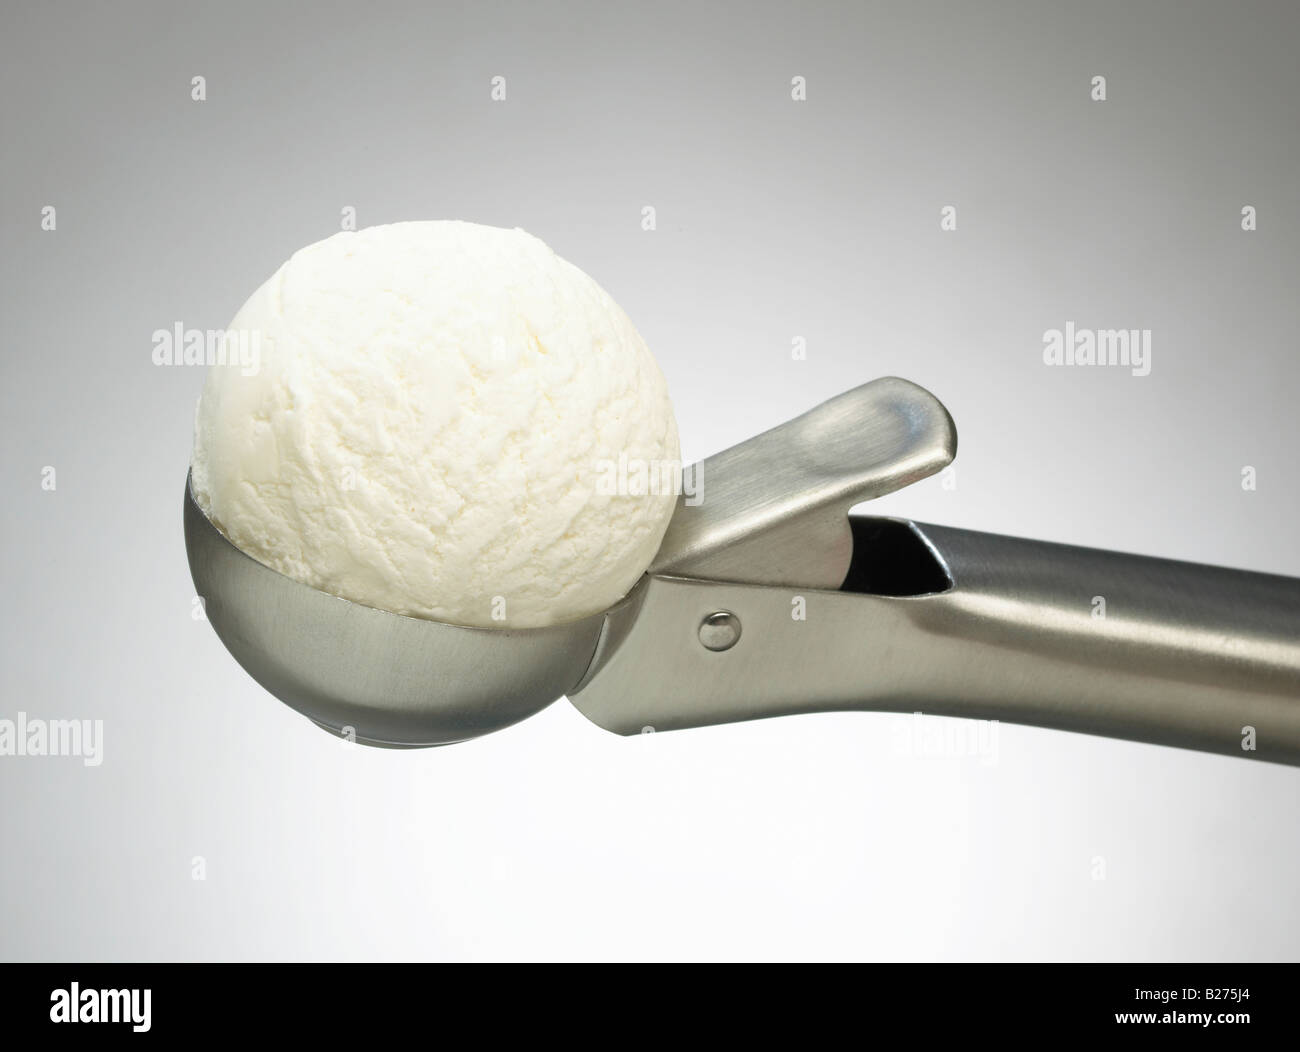 https://c8.alamy.com/comp/B275J4/stainless-steel-ice-cream-scoop-with-vanilla-ice-cream-B275J4.jpg